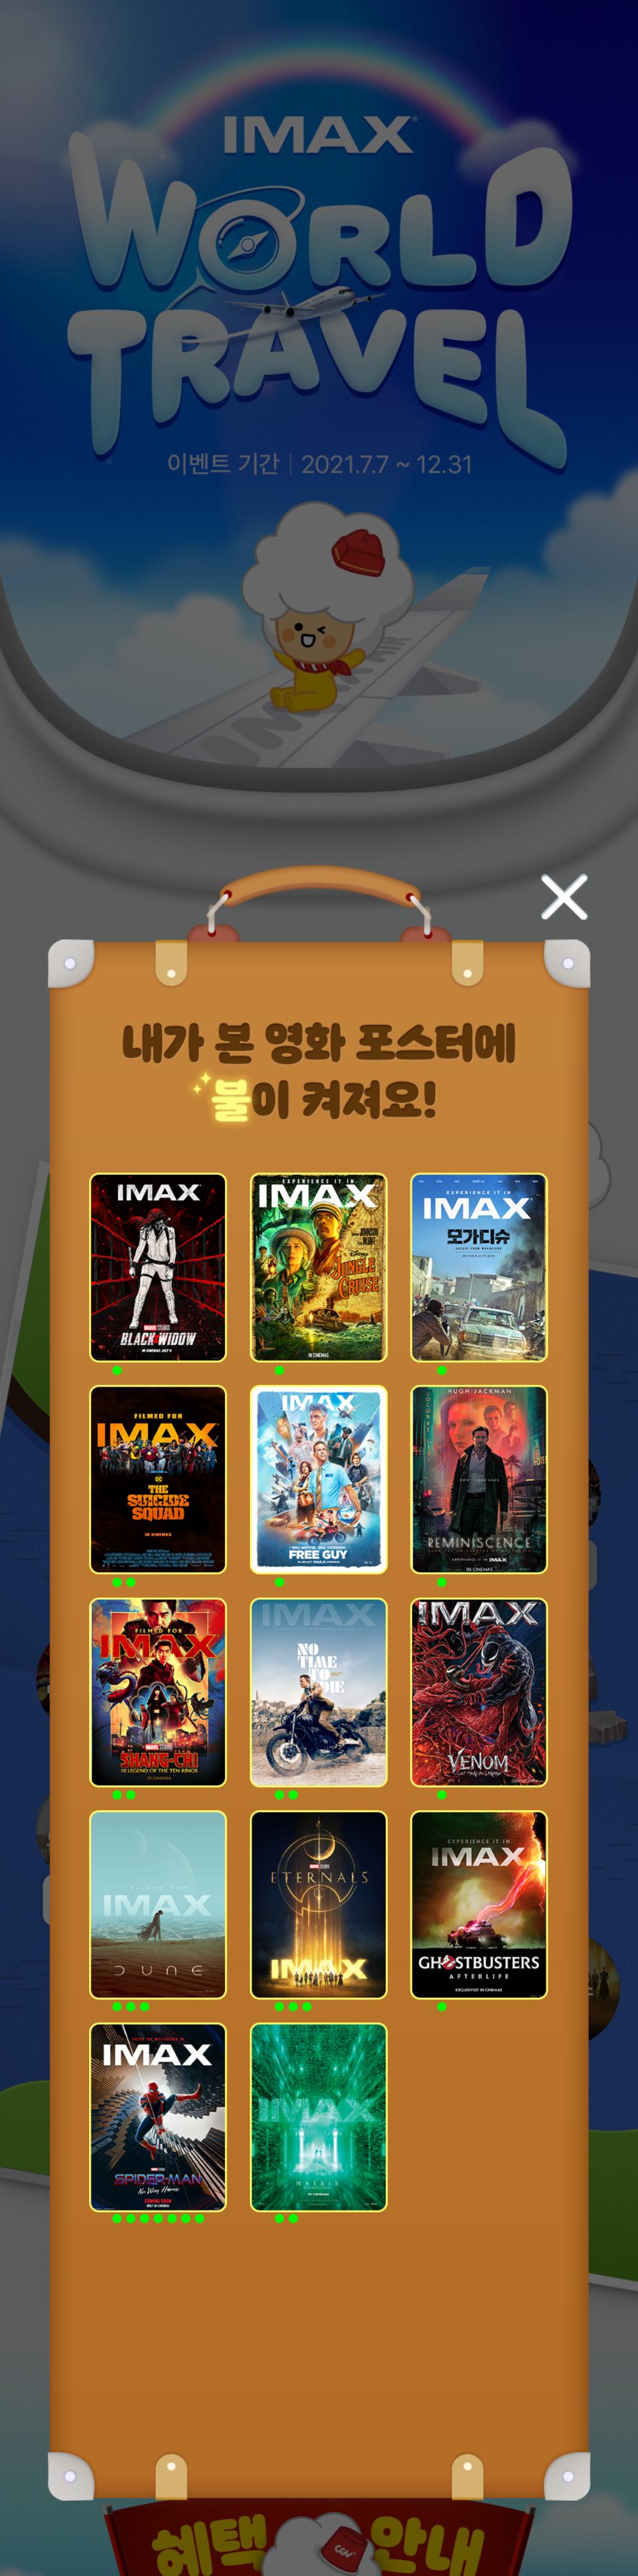 IMAX_World_Travel.png.jpg